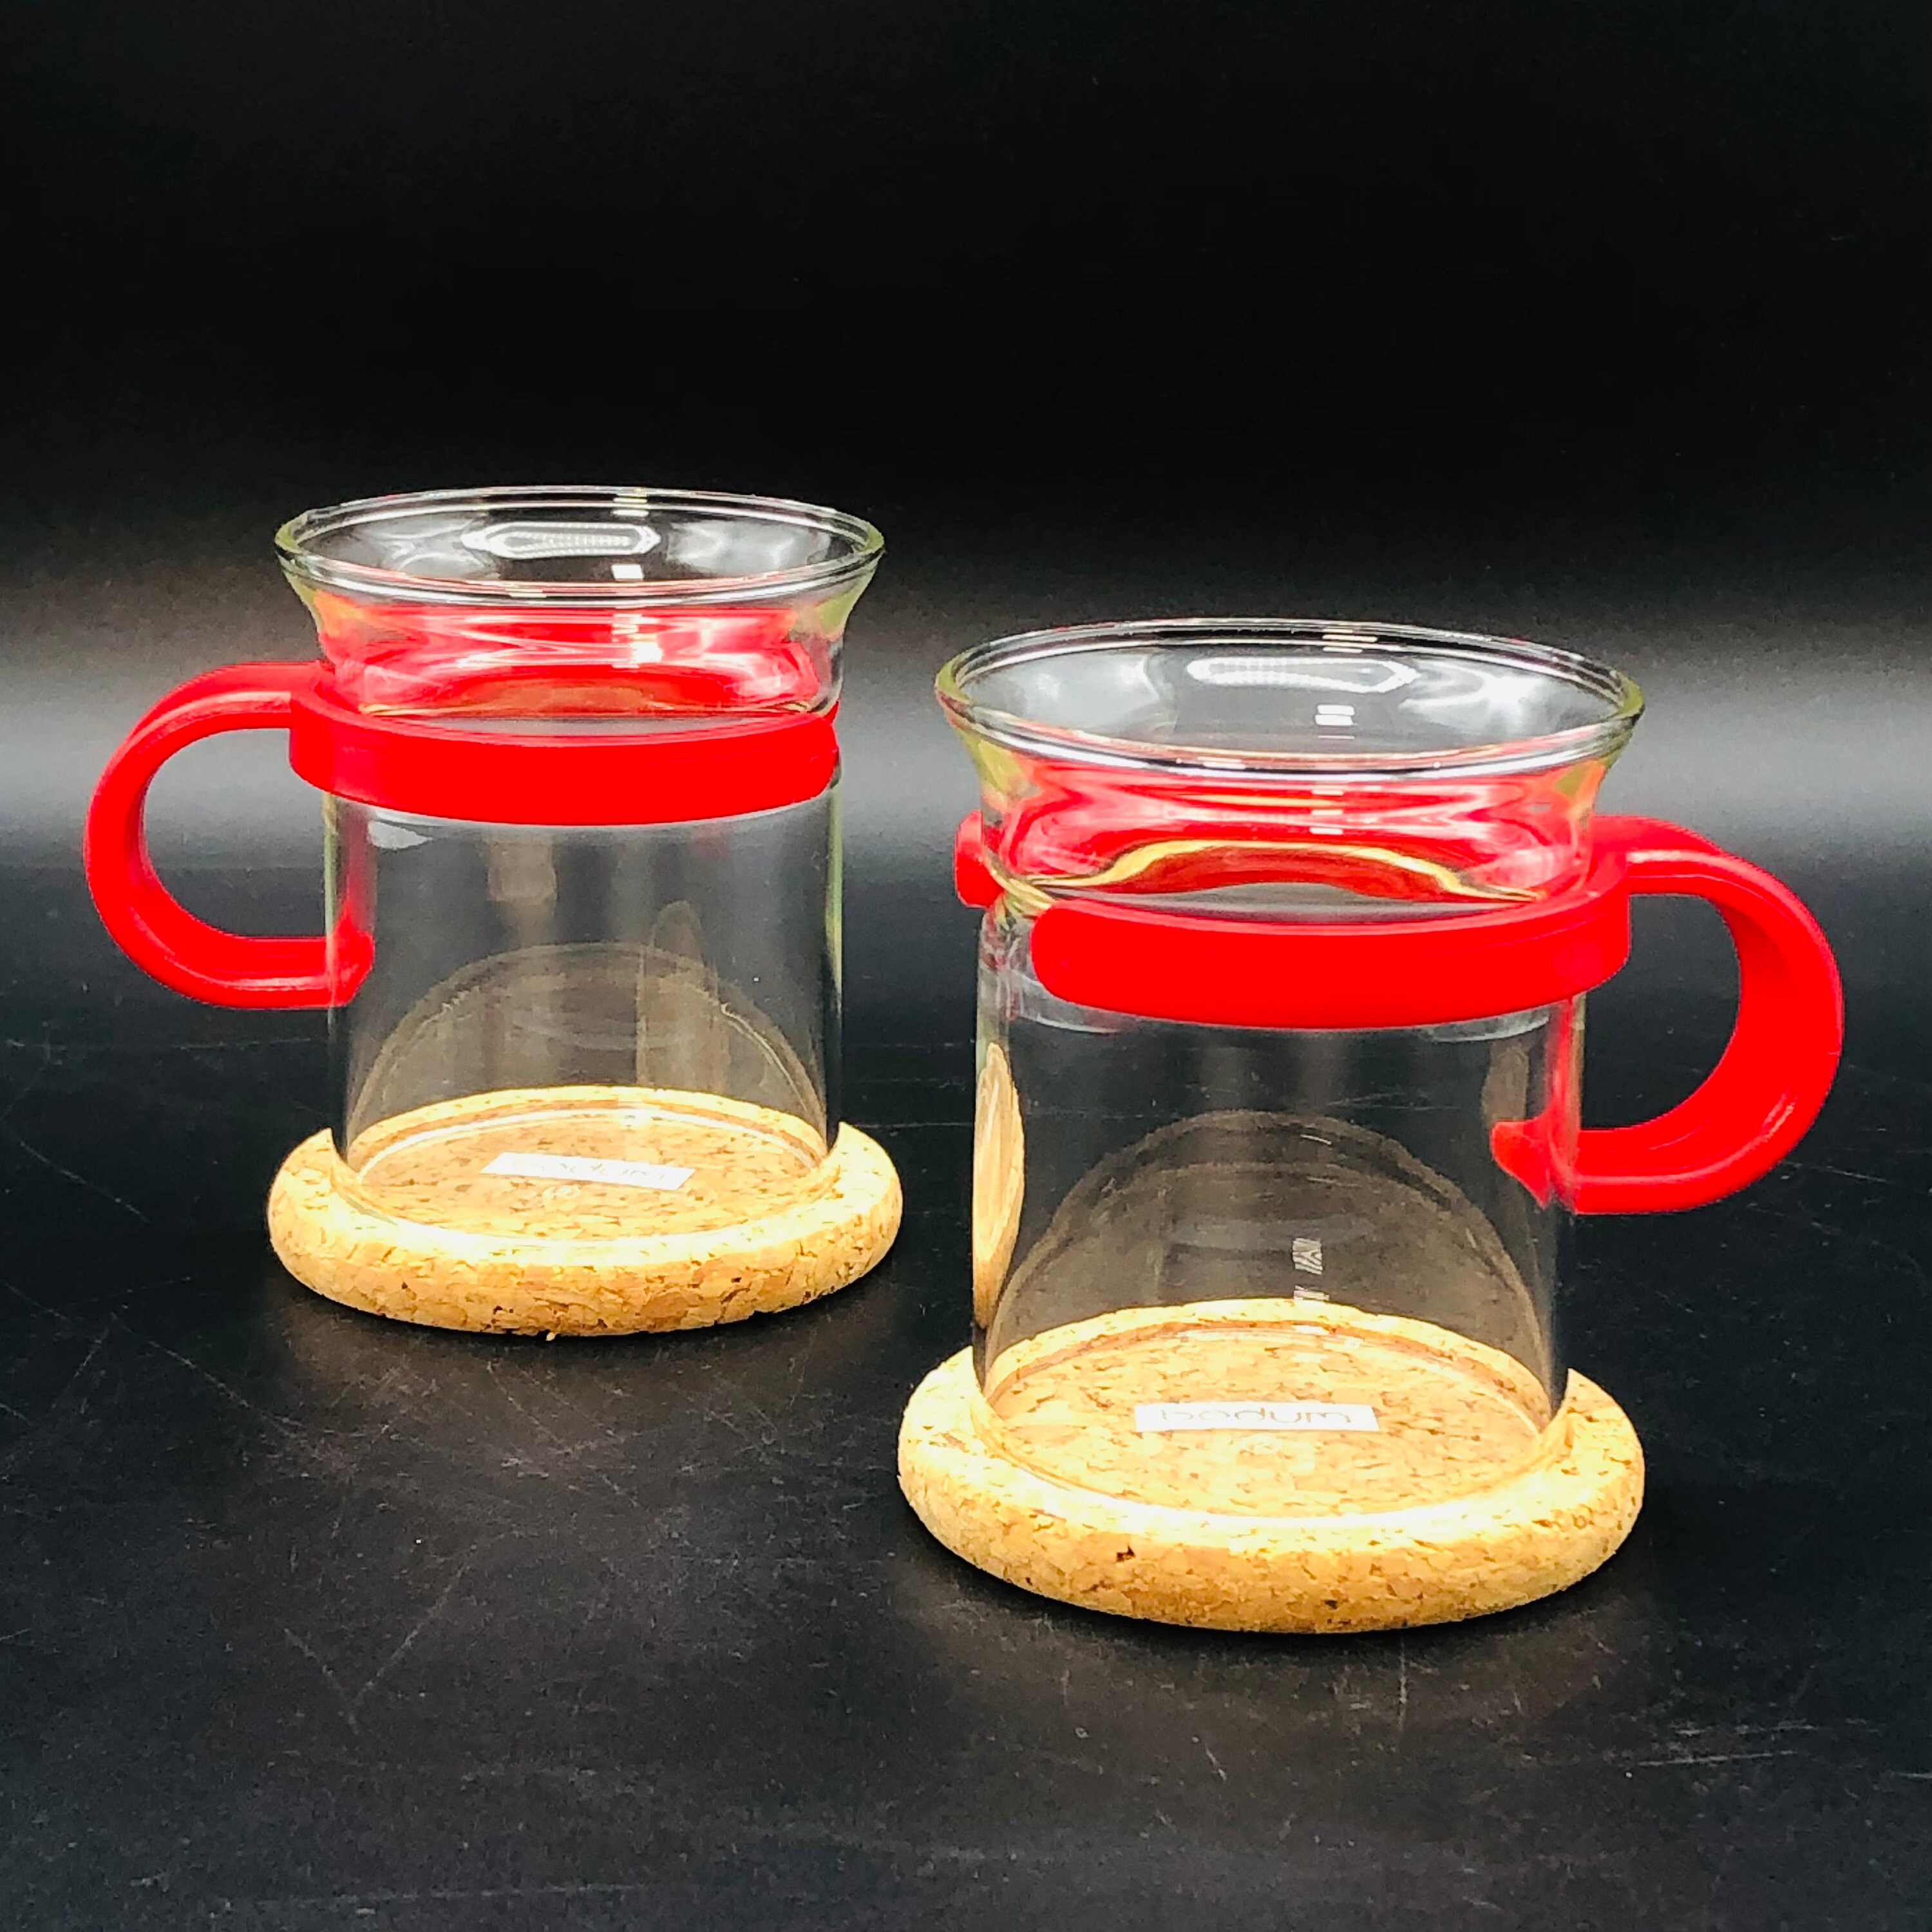 Set of 3 Danesco Bodum Coffee Cups, White Ceramic With Red Logos